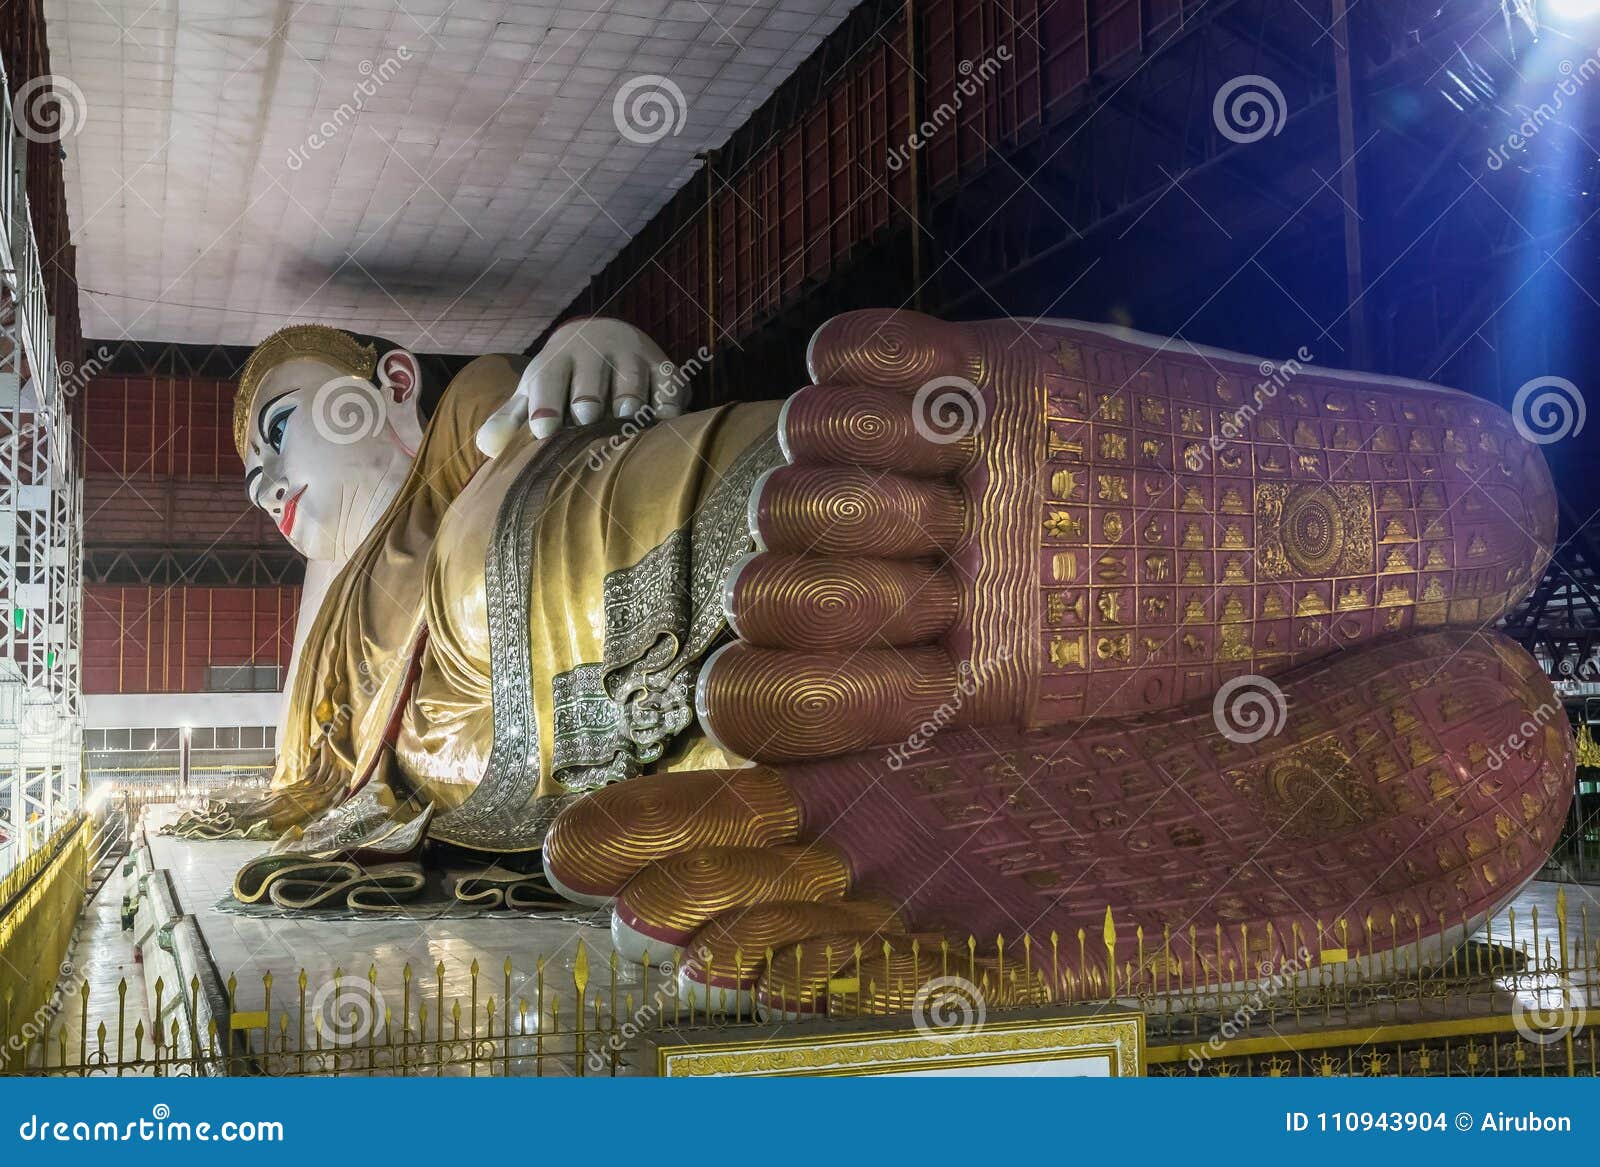 big buddha kyauk htat gyi reclining buddha statue in myanmar burma at night